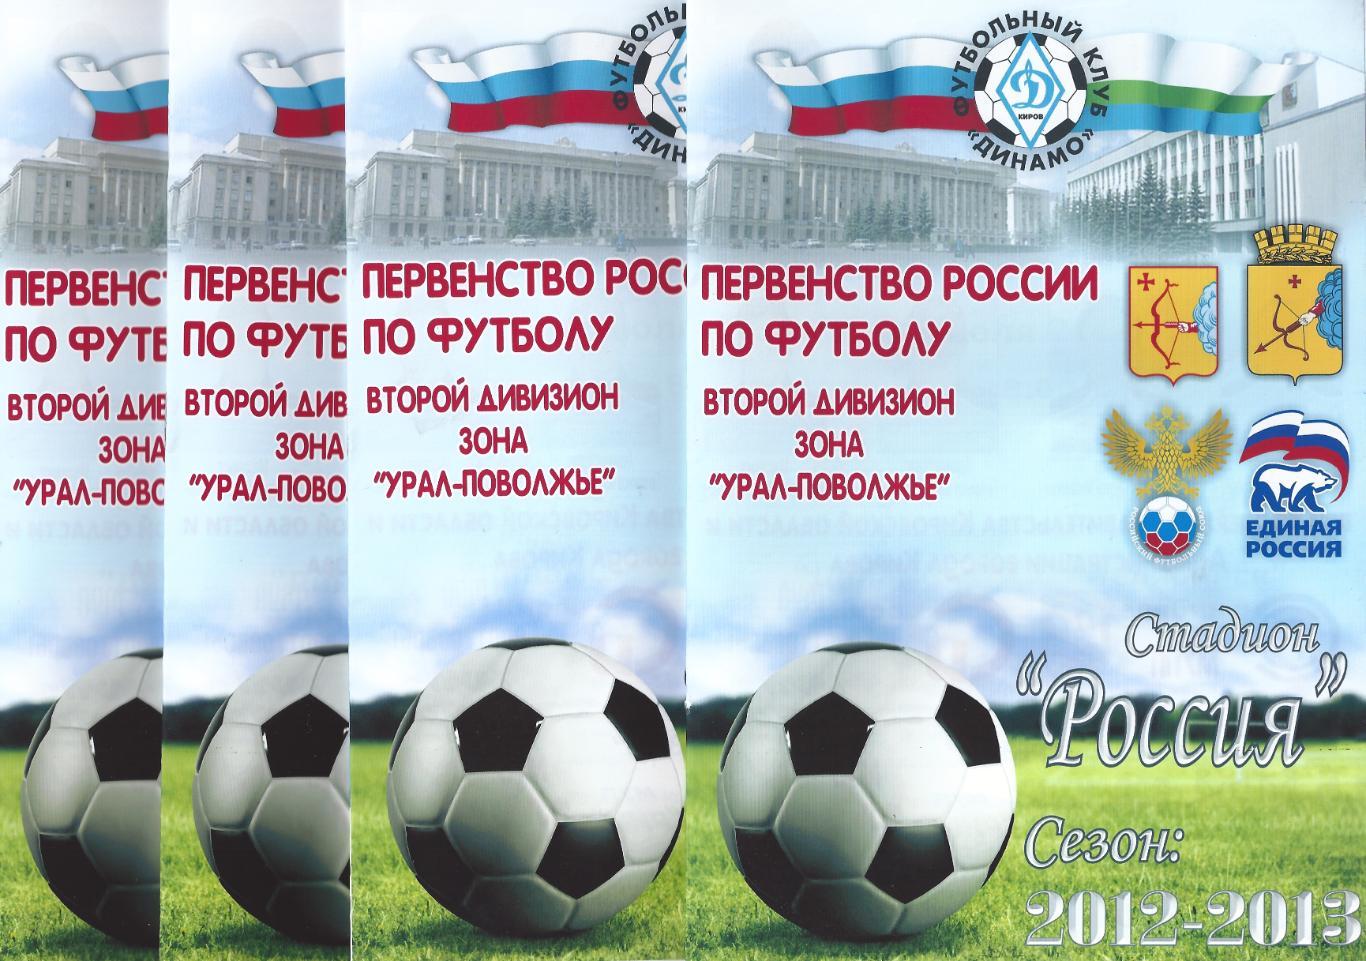 2012/2013 - Динамо Киров - КАМАЗ Набережные Челны